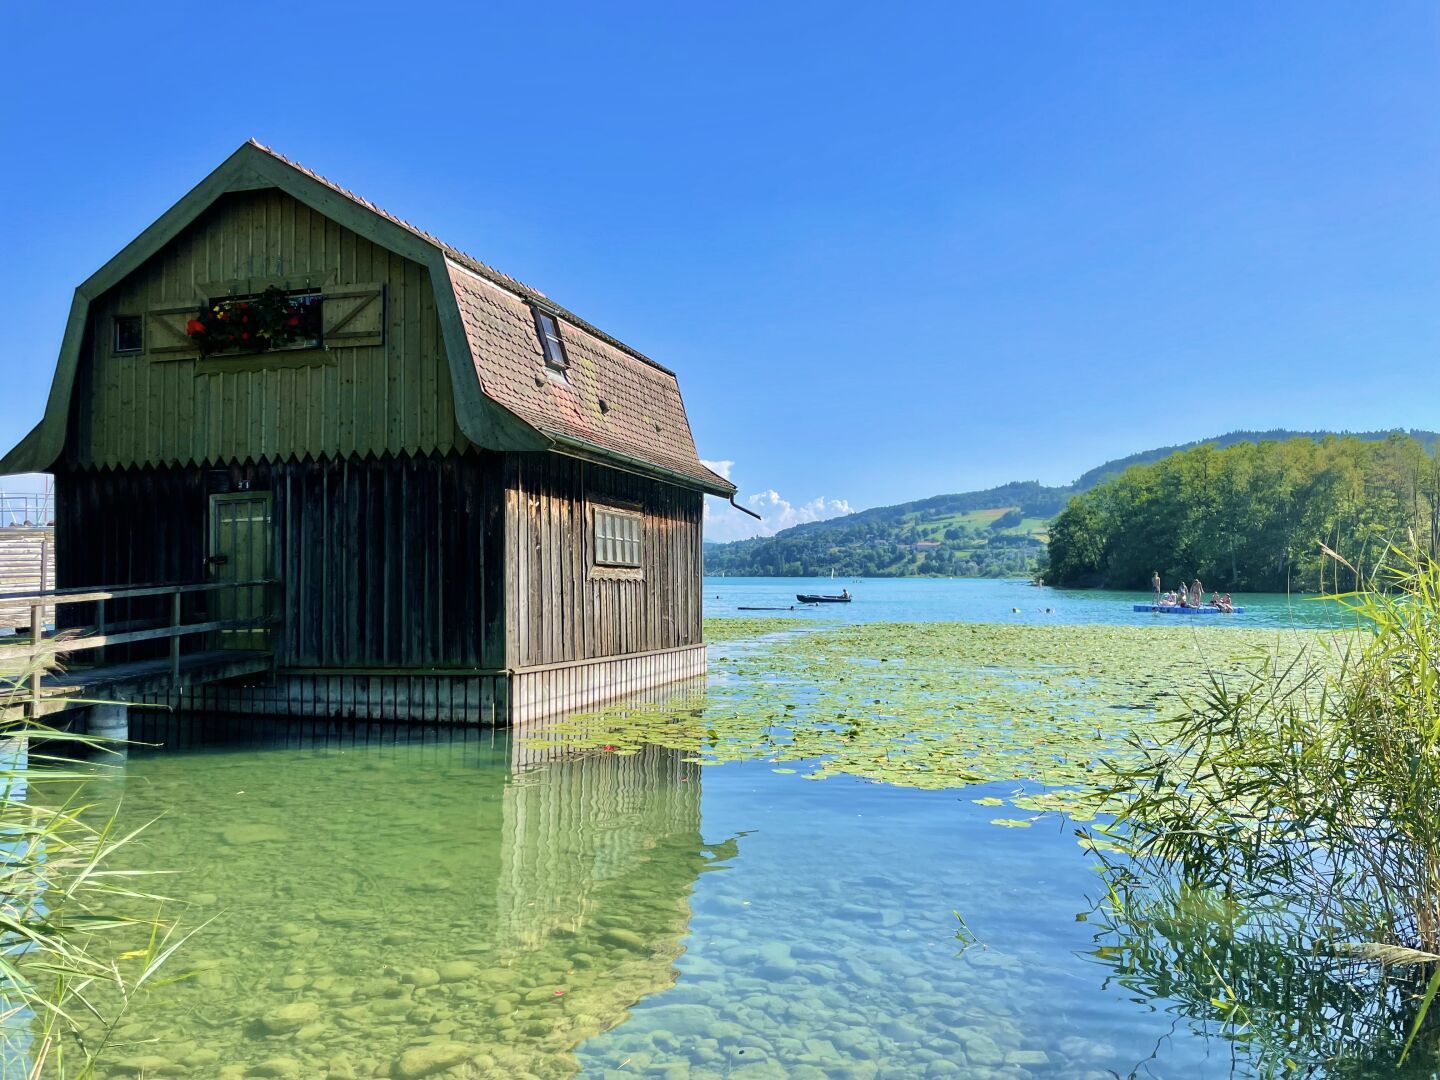 Bootshaus am Hallwiler See, Schweiz
- Boathouse on Lake Hallwil, Switzerland